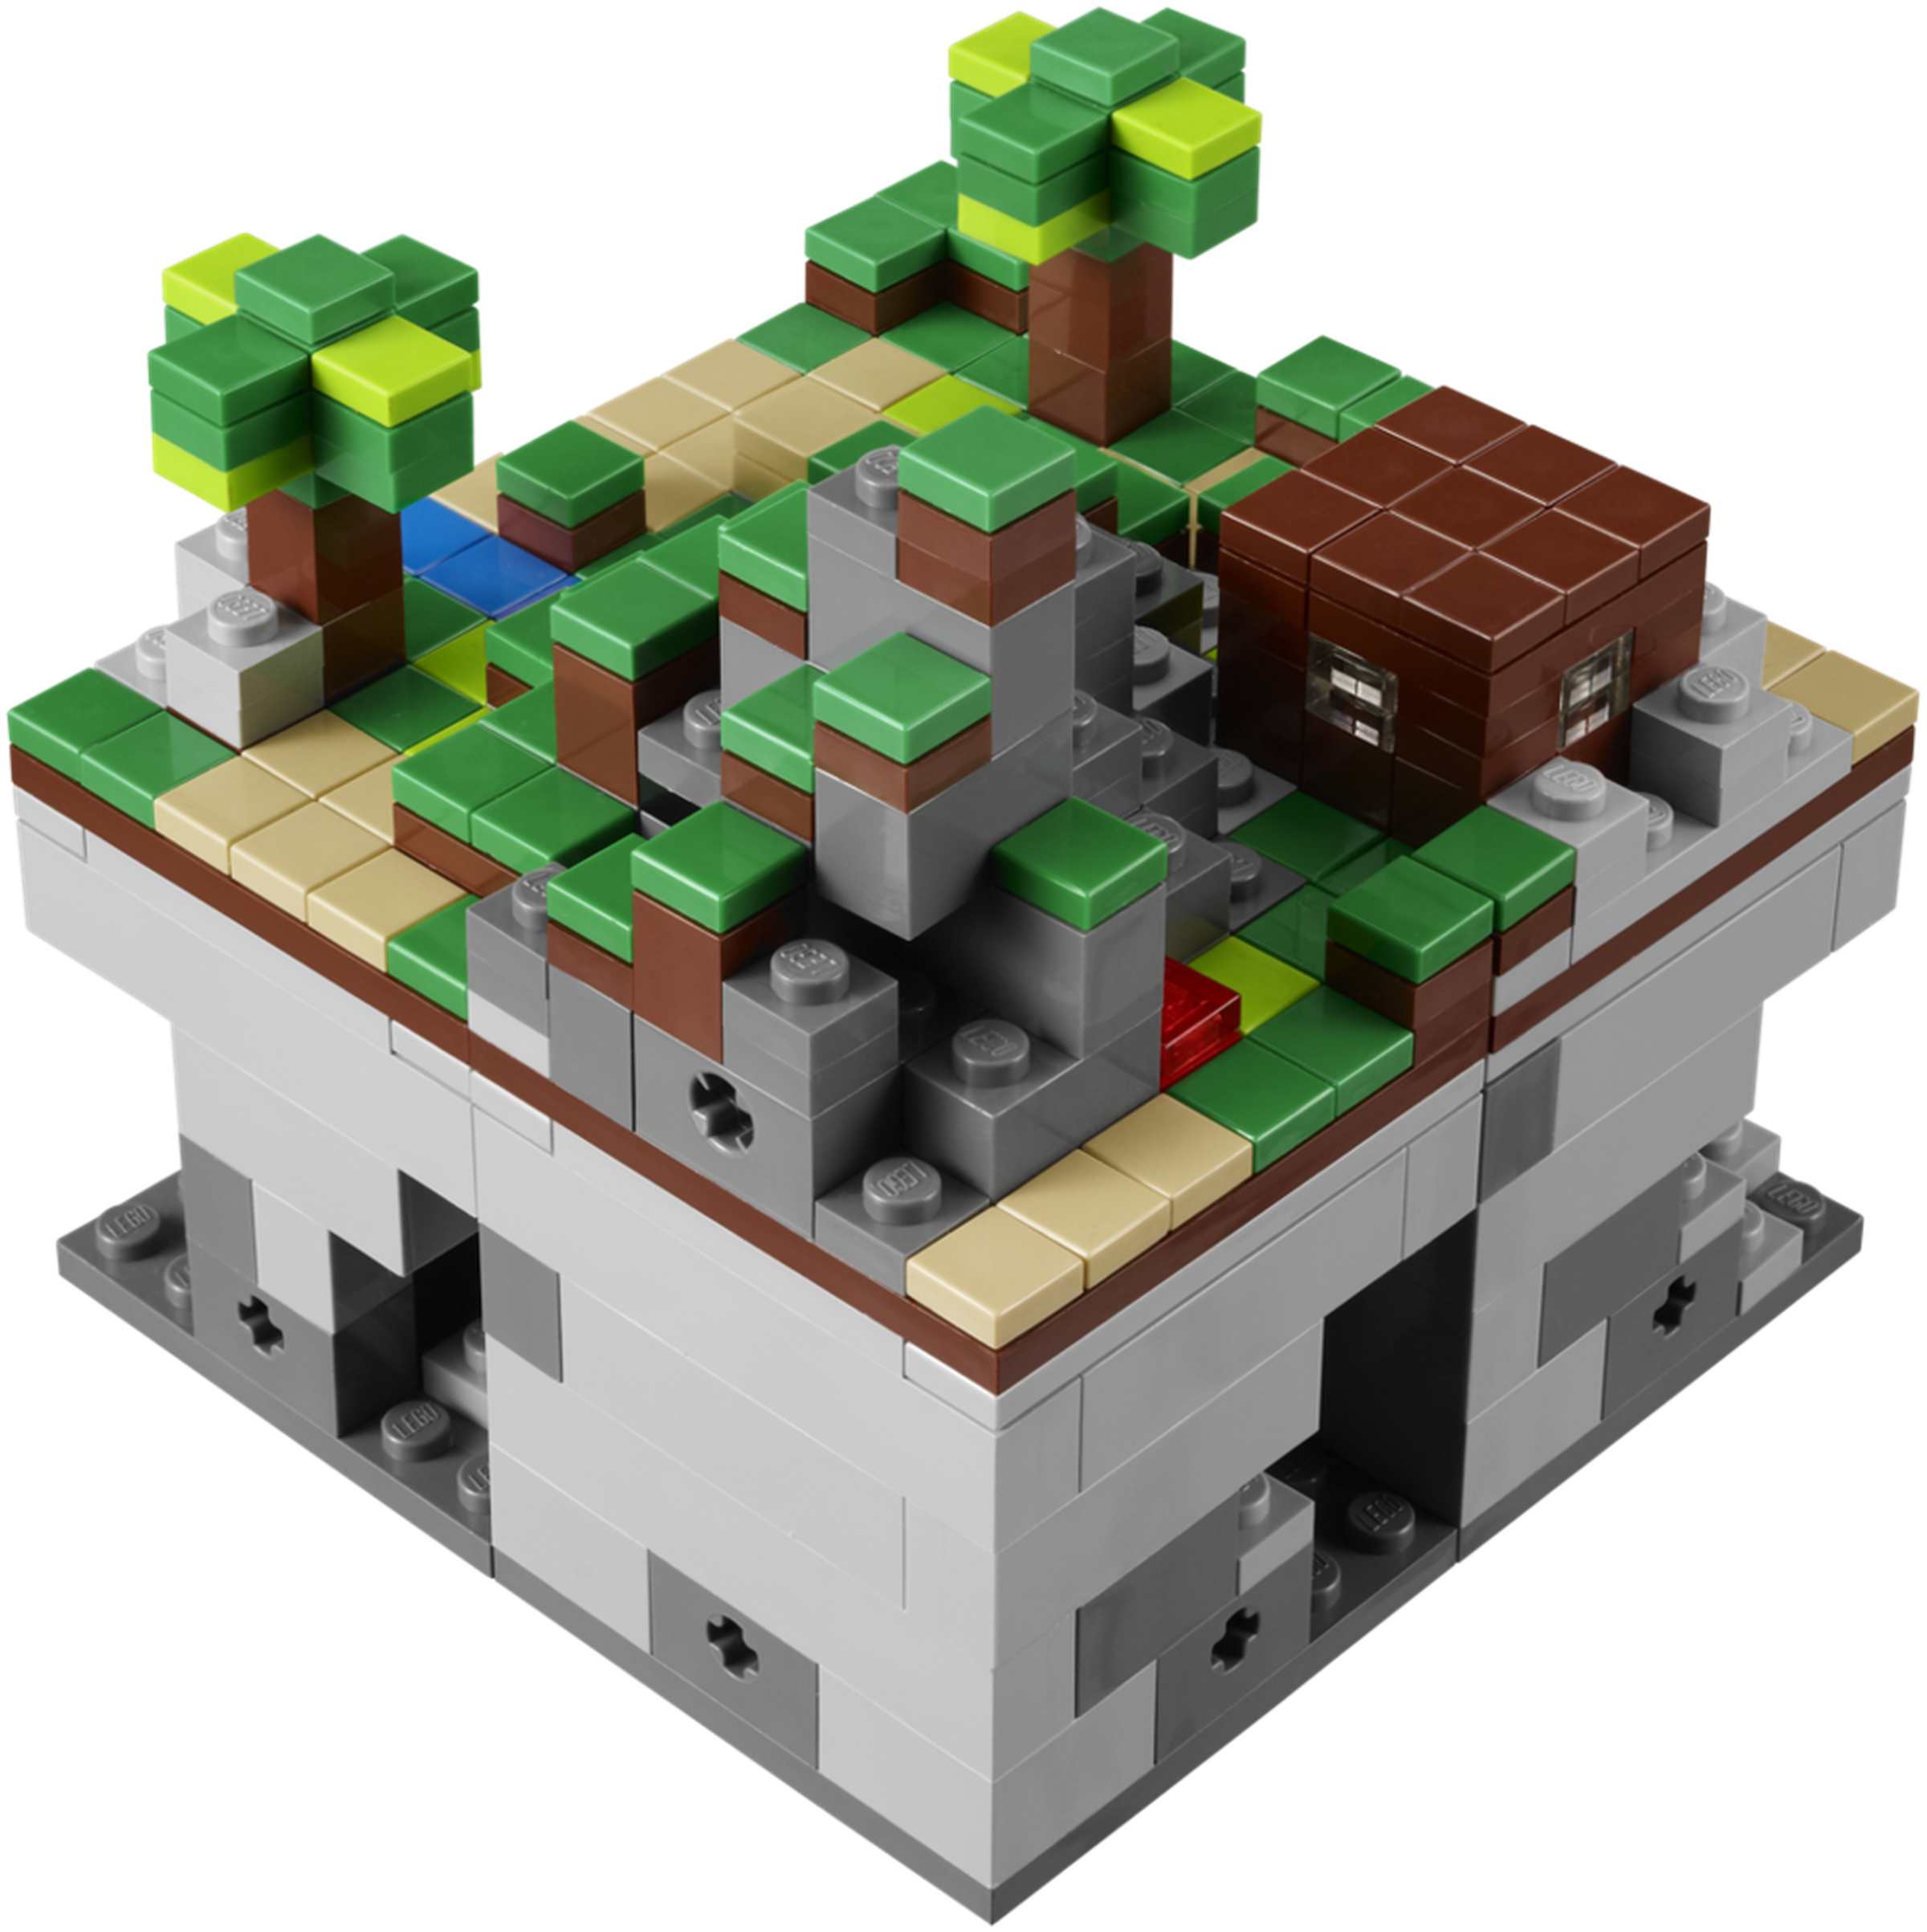 Lego's Minecraft set